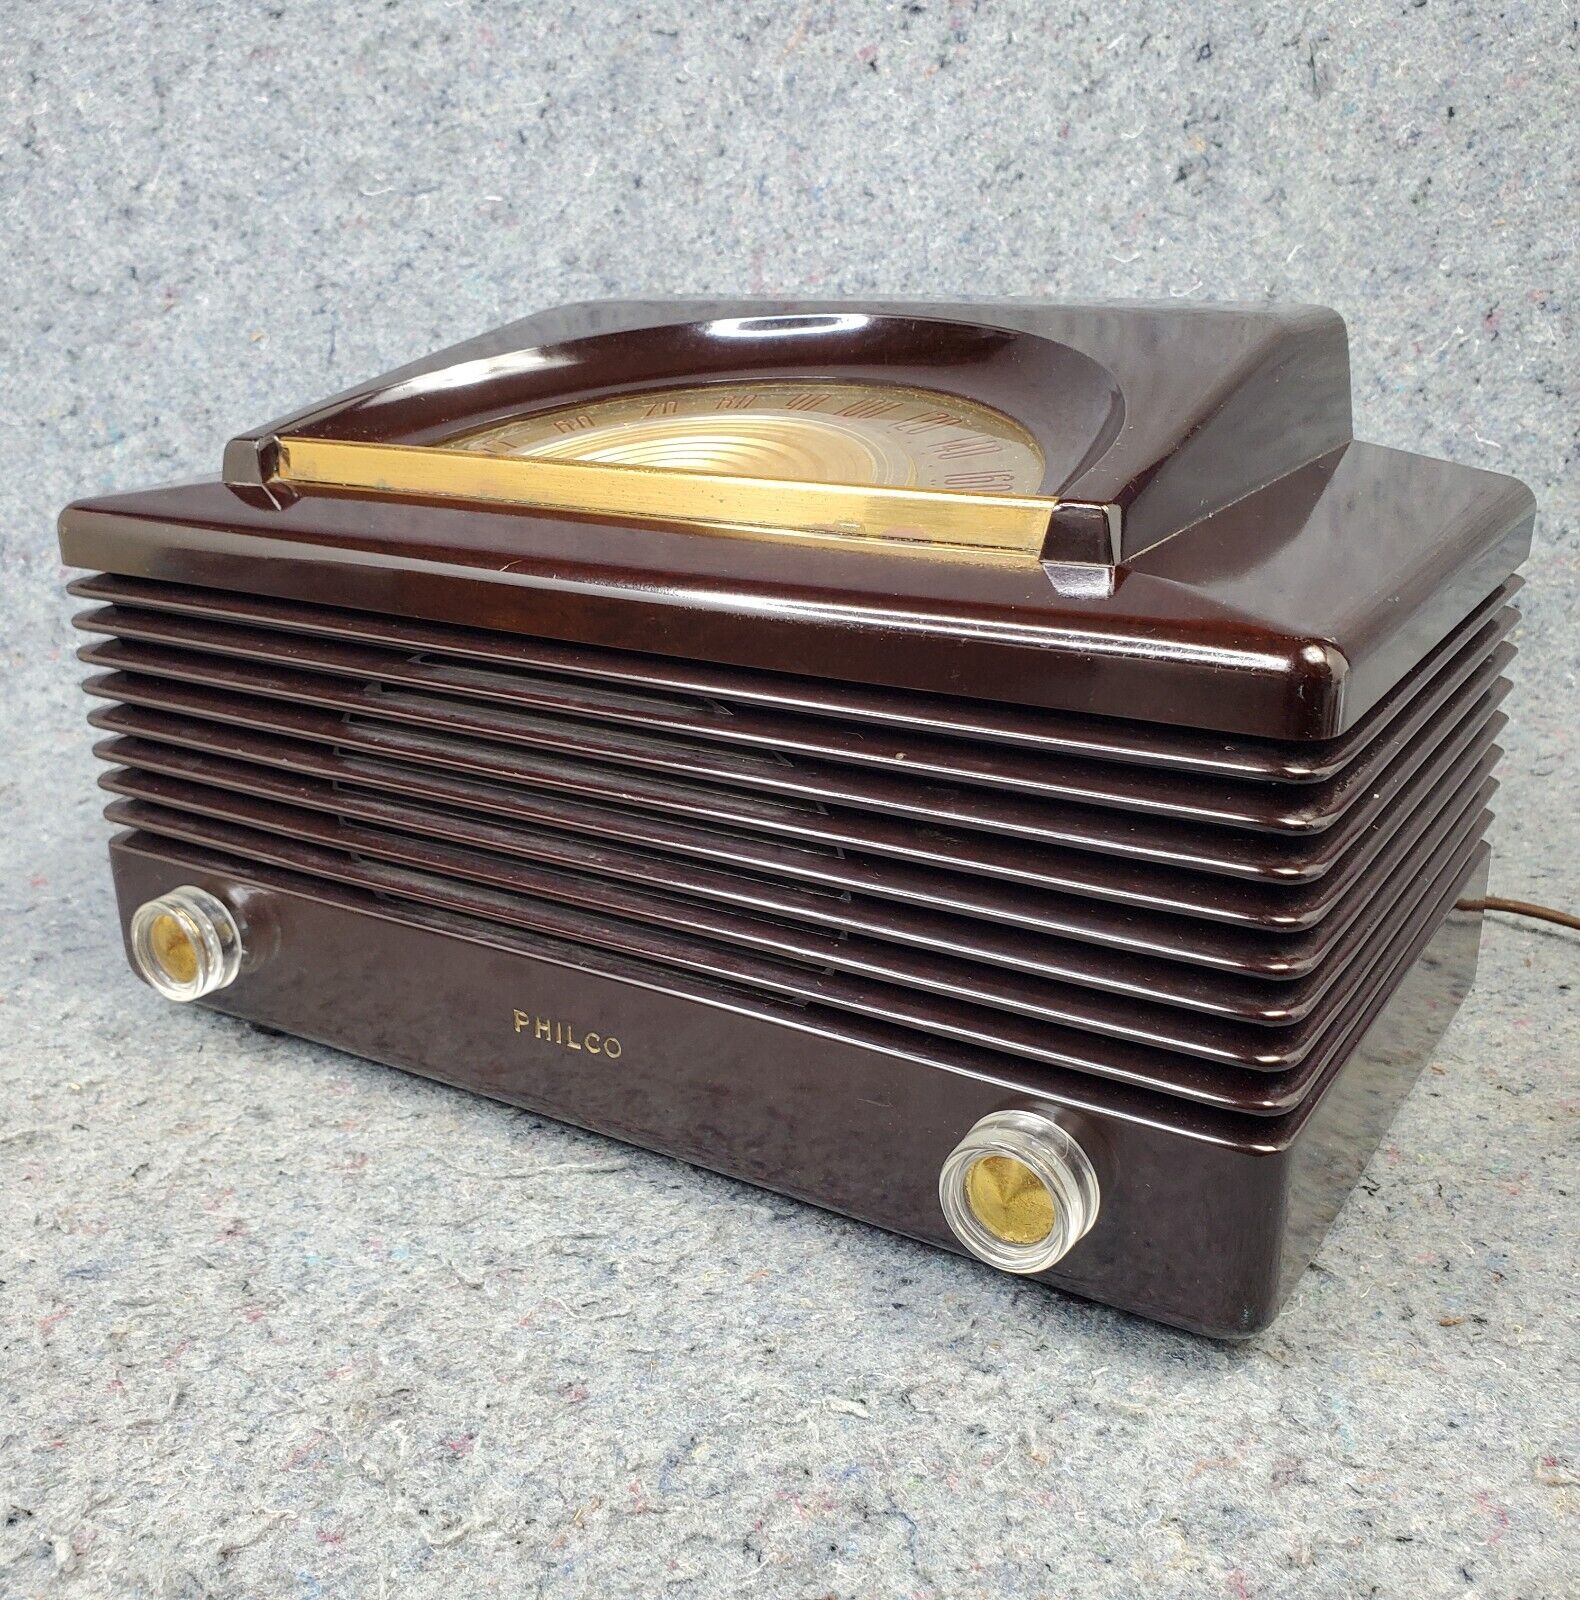 Philco Tube Radio 50-920 Vintage 1950s AM MCM Bakelite Half Moon Dial Works